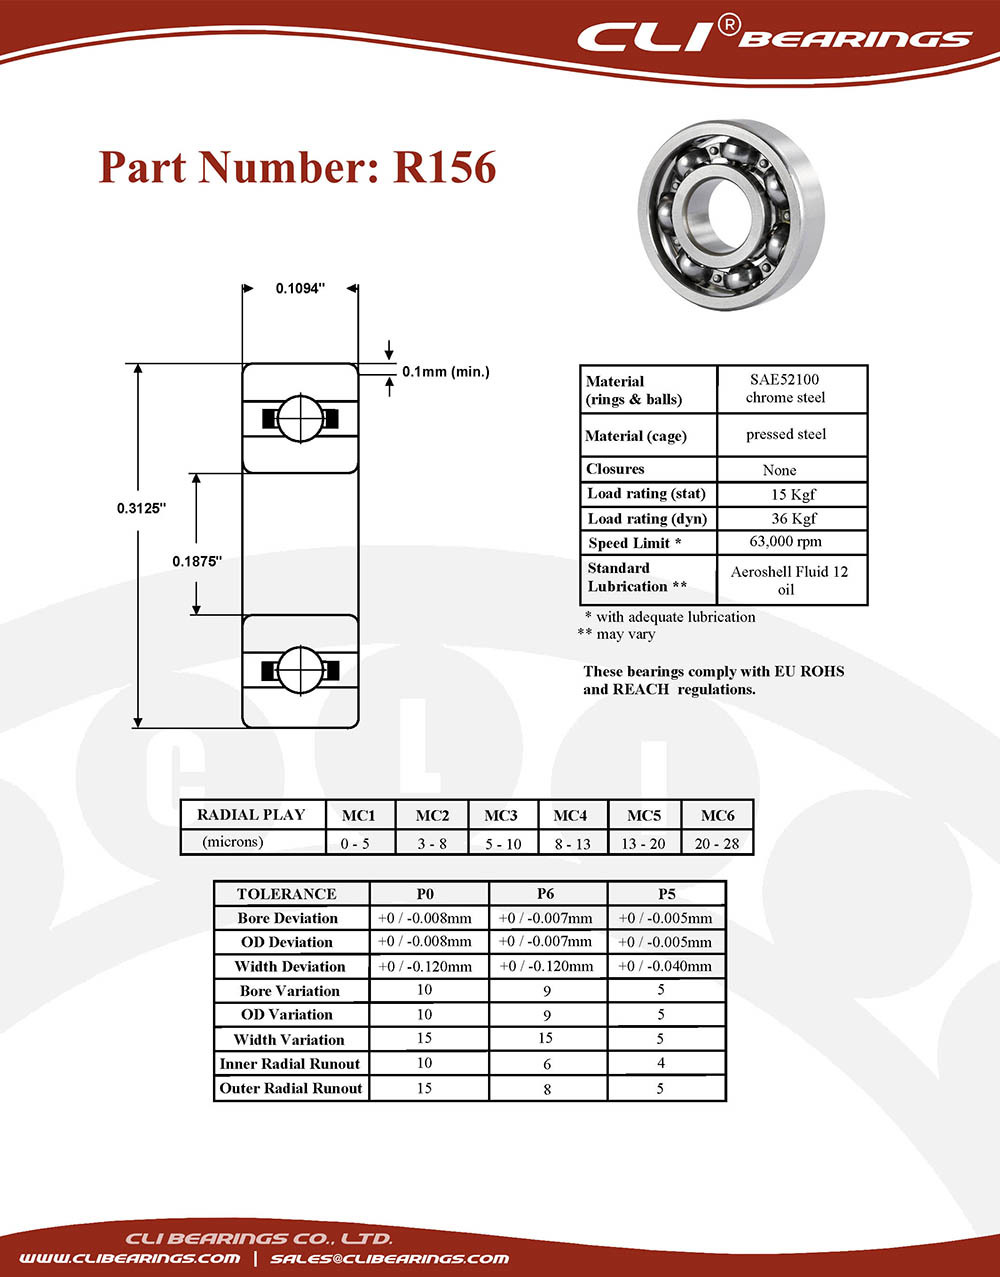 Original r156 miniature bearing 3 16x5 16x7 64 0 1875 x 0 3125 x 0 1094 inch   cli bearings co ltd nw